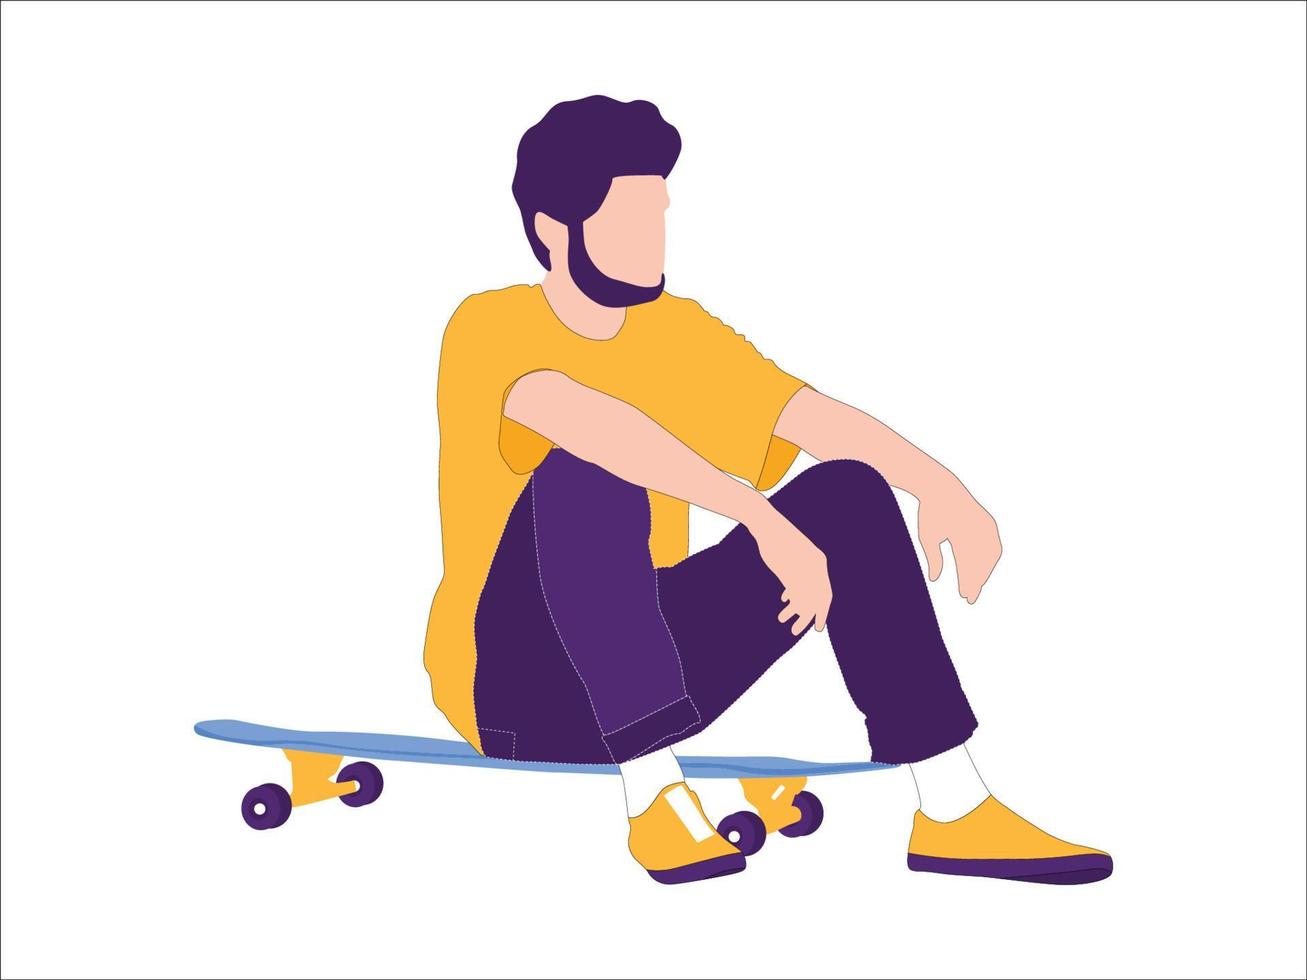 Skateboard t shirt design vector